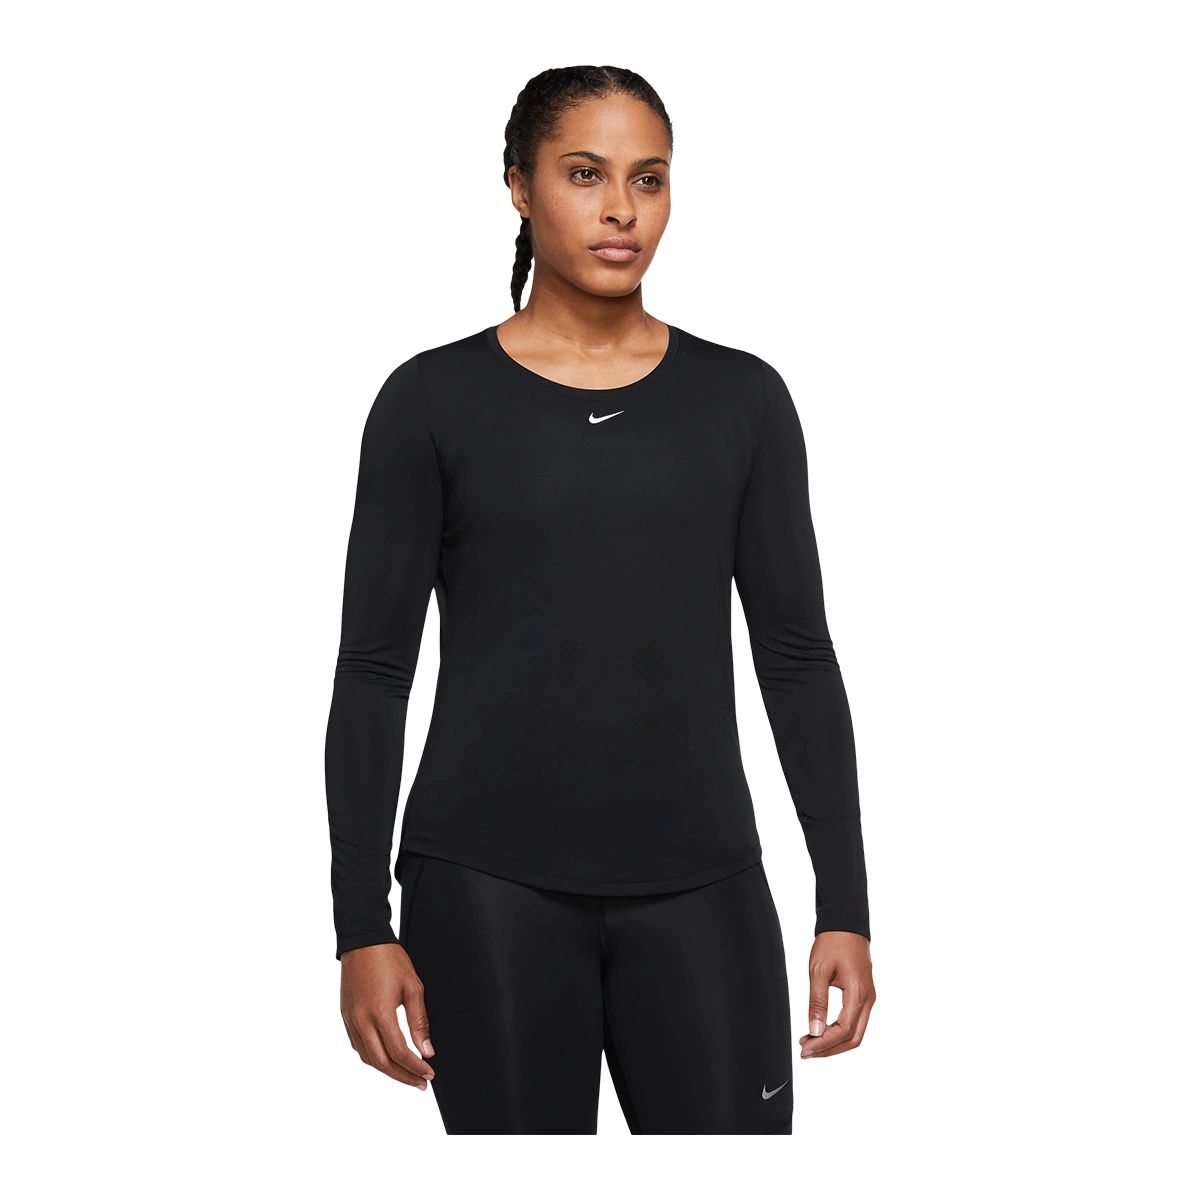 Nike Women's One Standard Long Sleeve Shirt